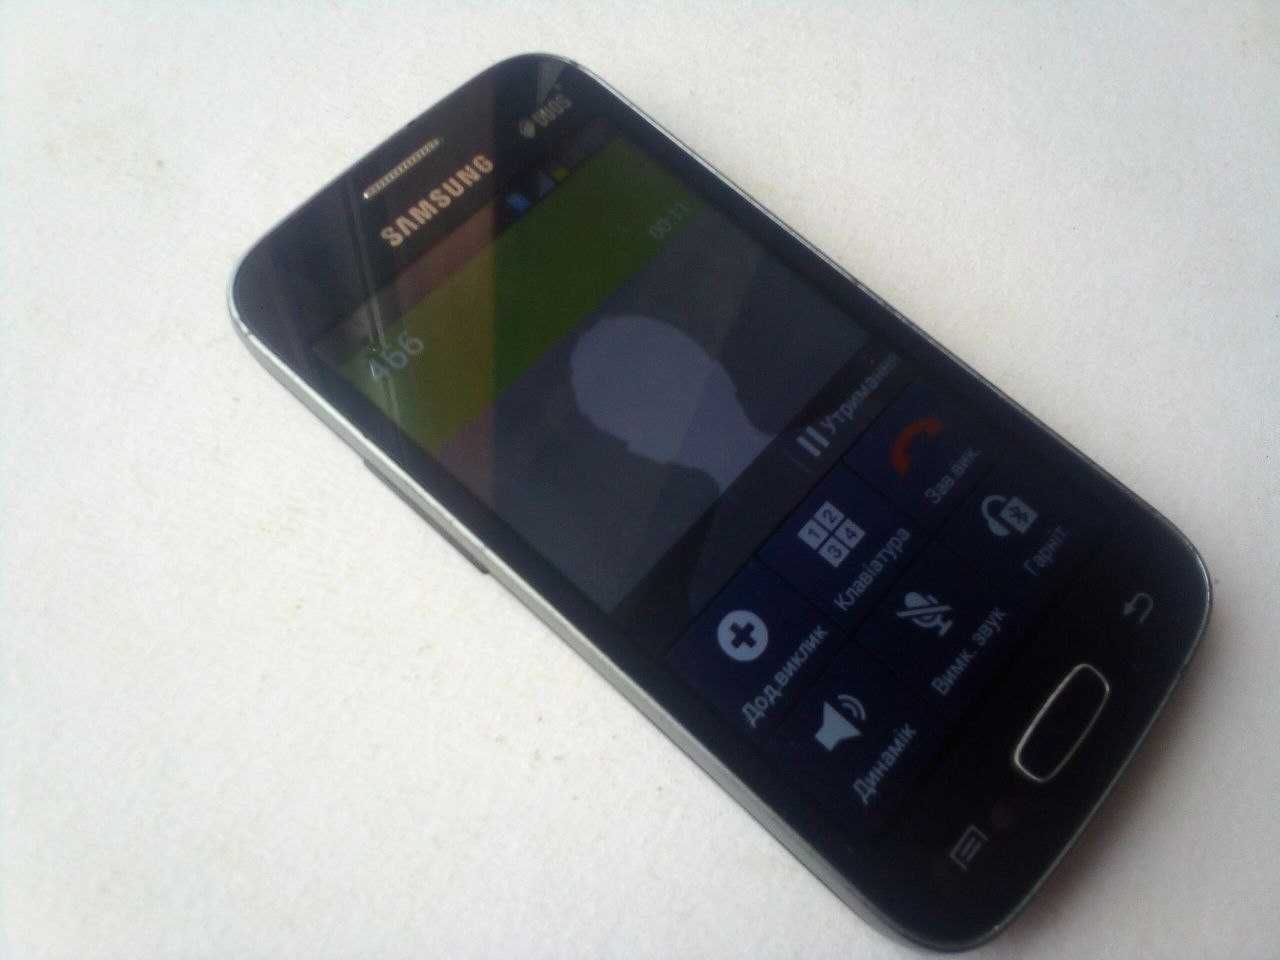 Android-смартфон Samsung Galaxy Star Plus (S7262/G318H) DUOS (РОБОЧИЙ)